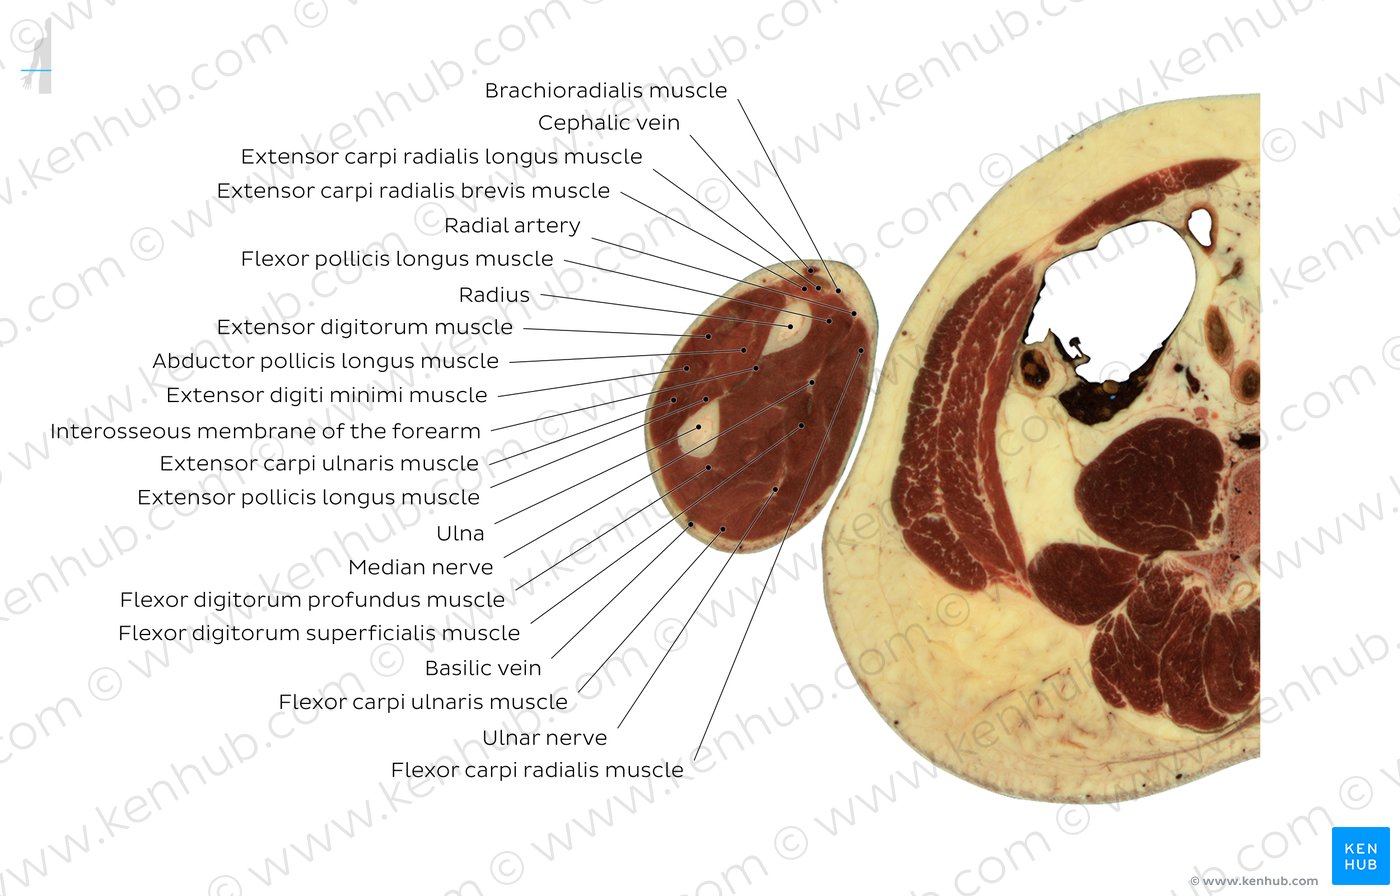 Flexor carpi ulnaris muscle level: Overview